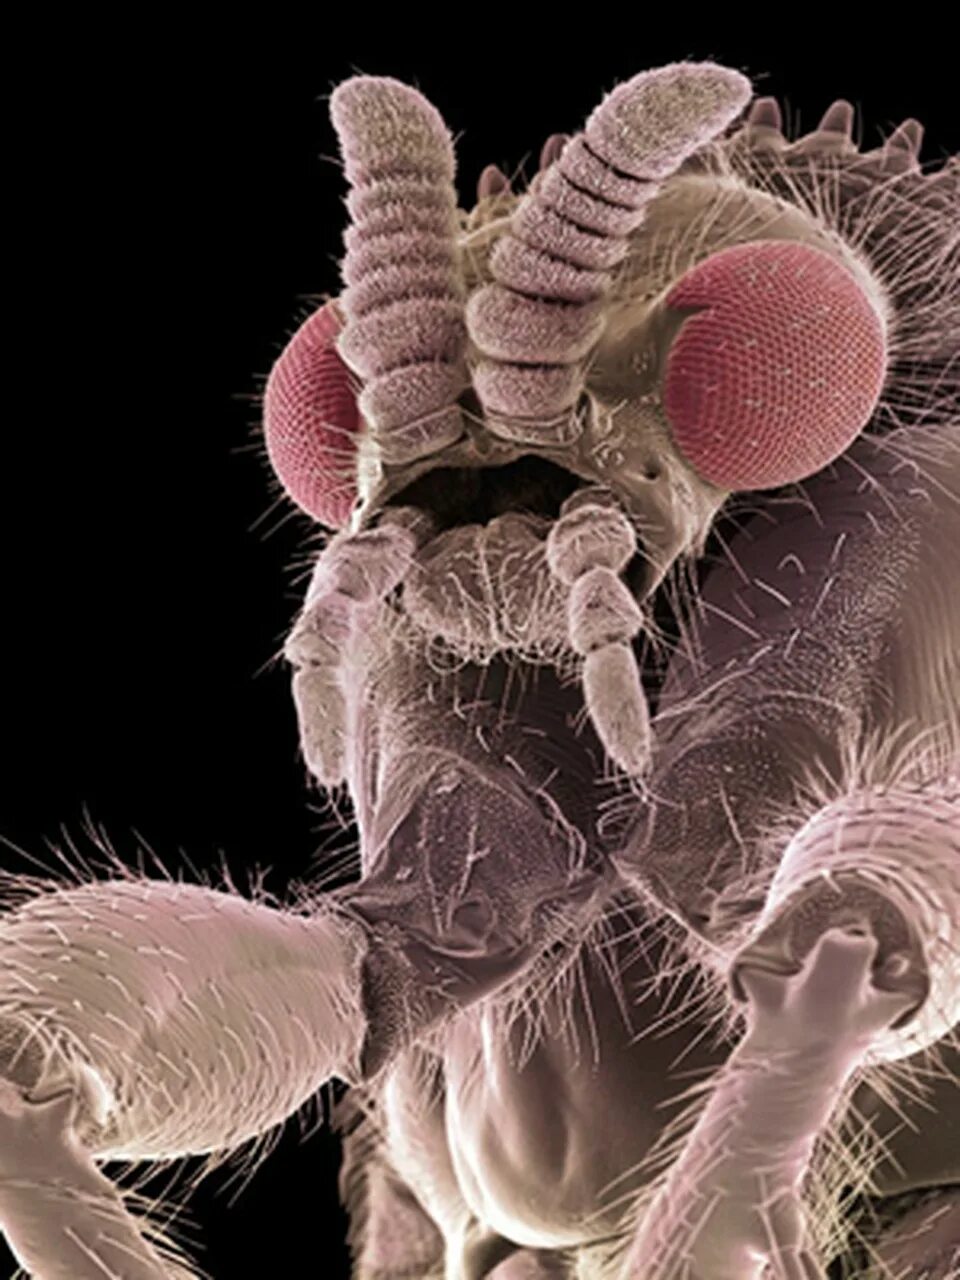 Мошка под микроскопом фото. Астраханская мошка под микроскопом. Бактерии под микроскопом. Мошка в микроскопе. Кусачая мошка под микроскопом.